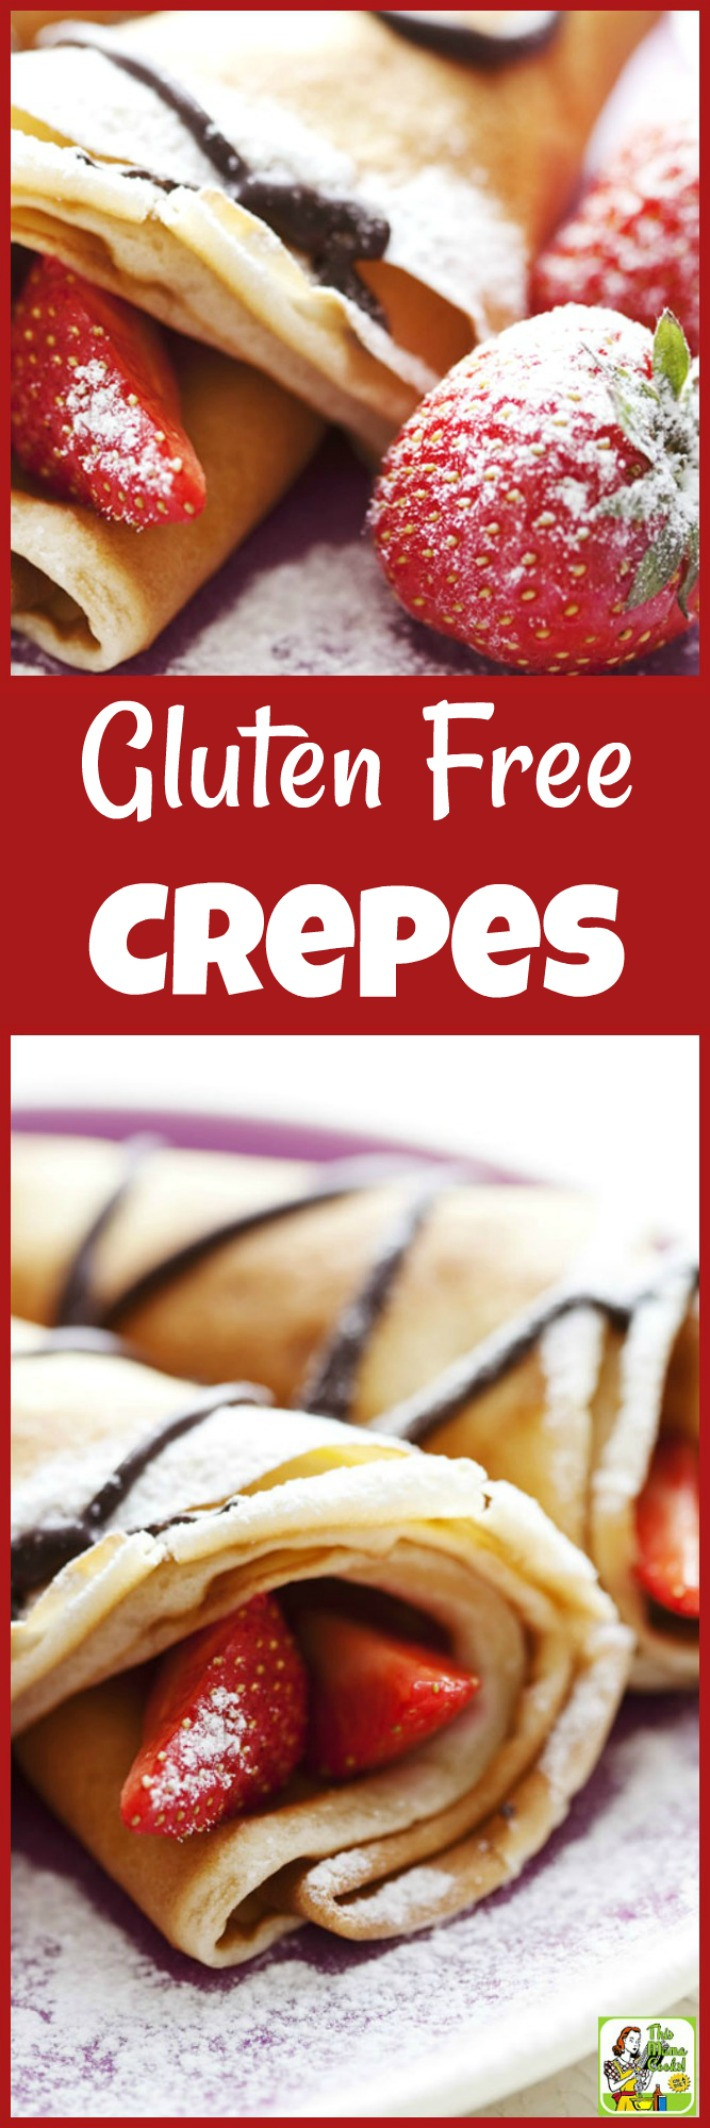 Gluten Free Crepes Recipe
 Gluten Free Crepes